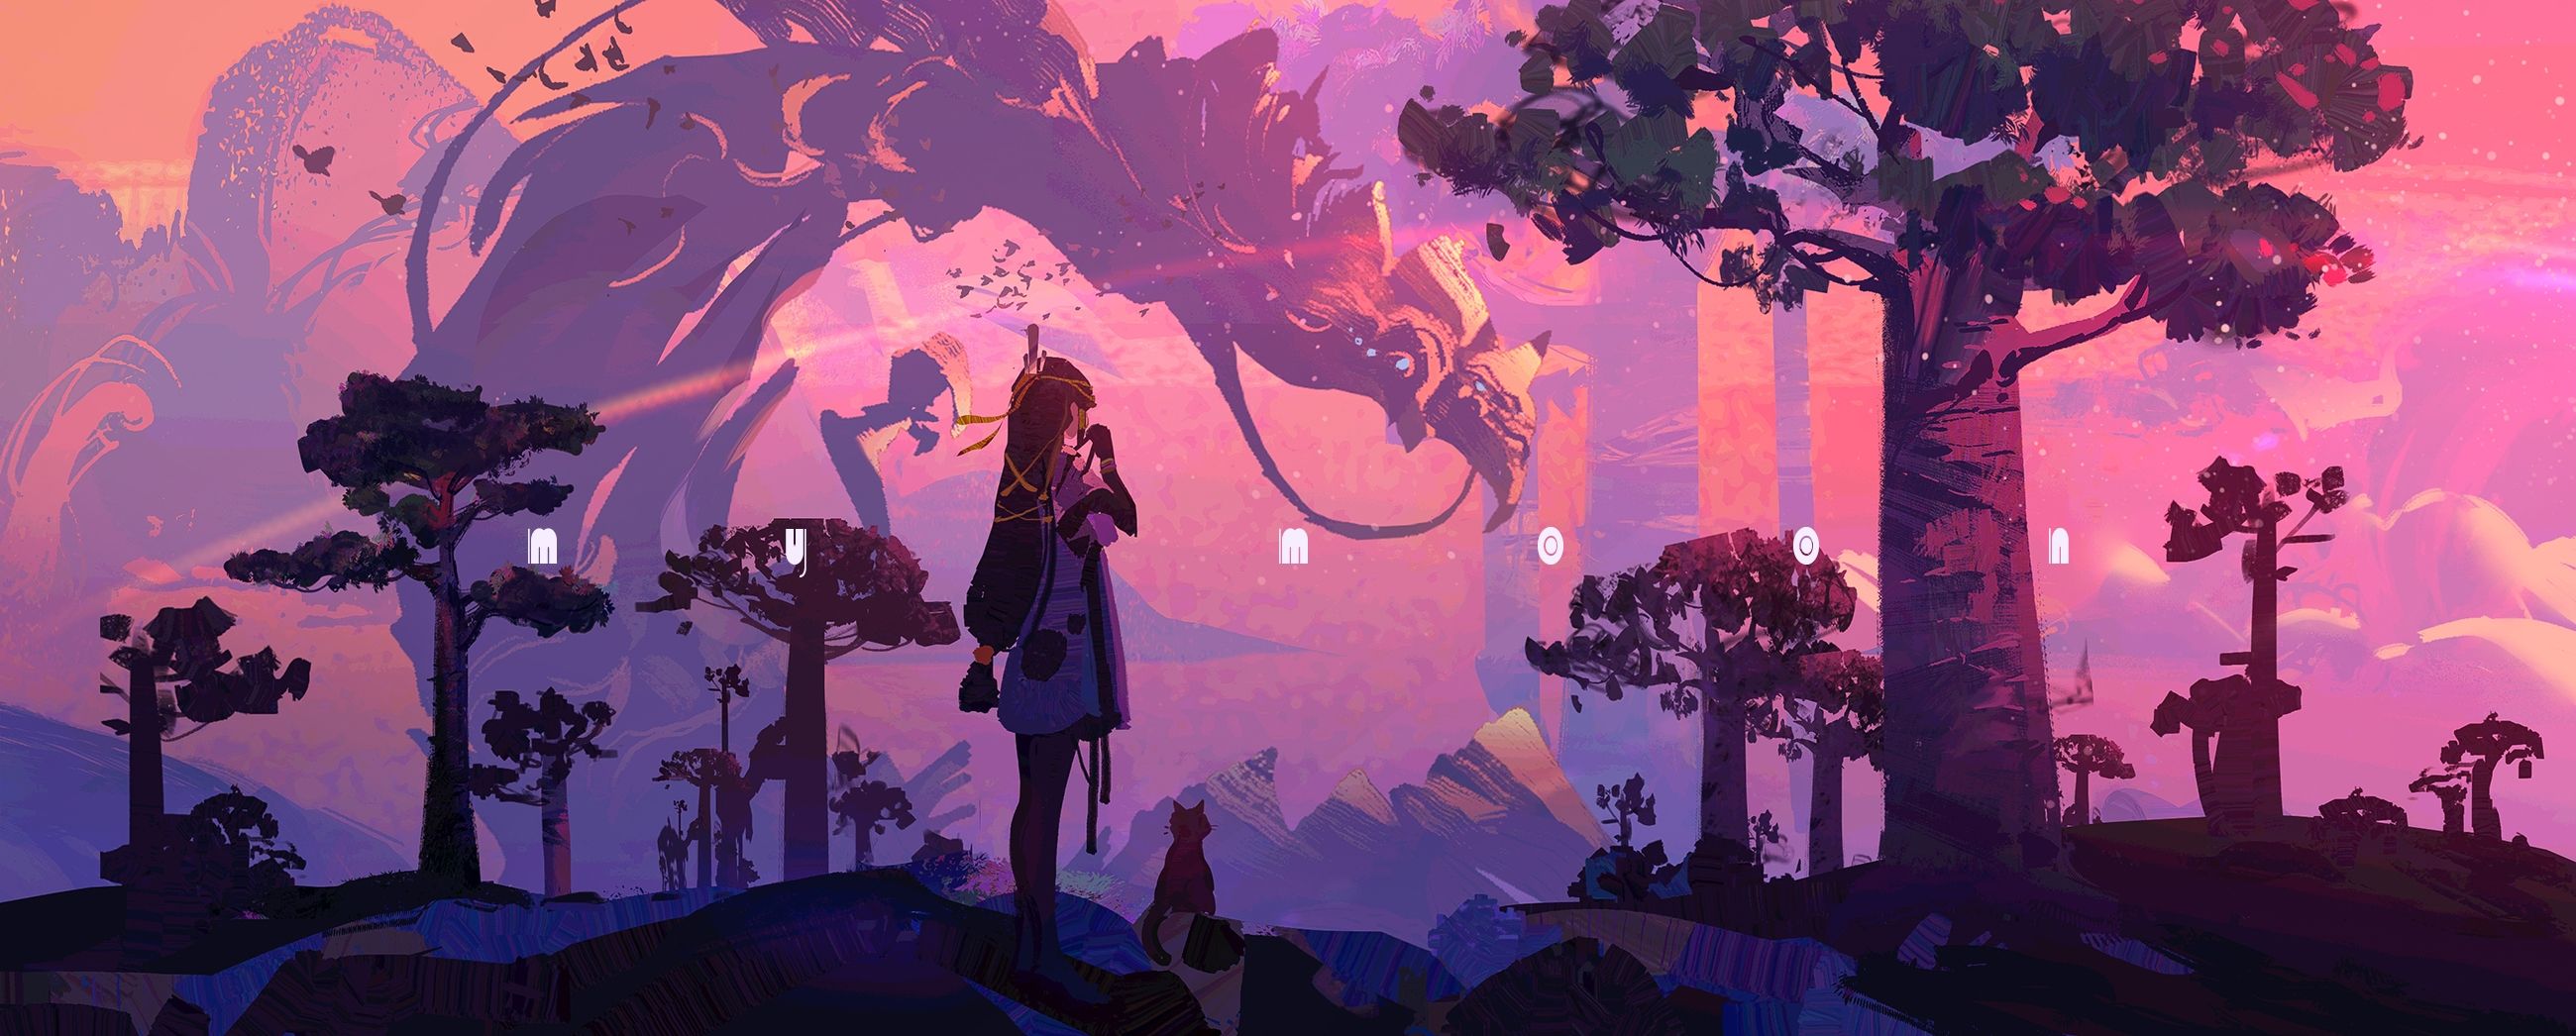 Download 2600x1046 Anime Landscape, Dragon, Girl, Trees, Scenic Wallpaper